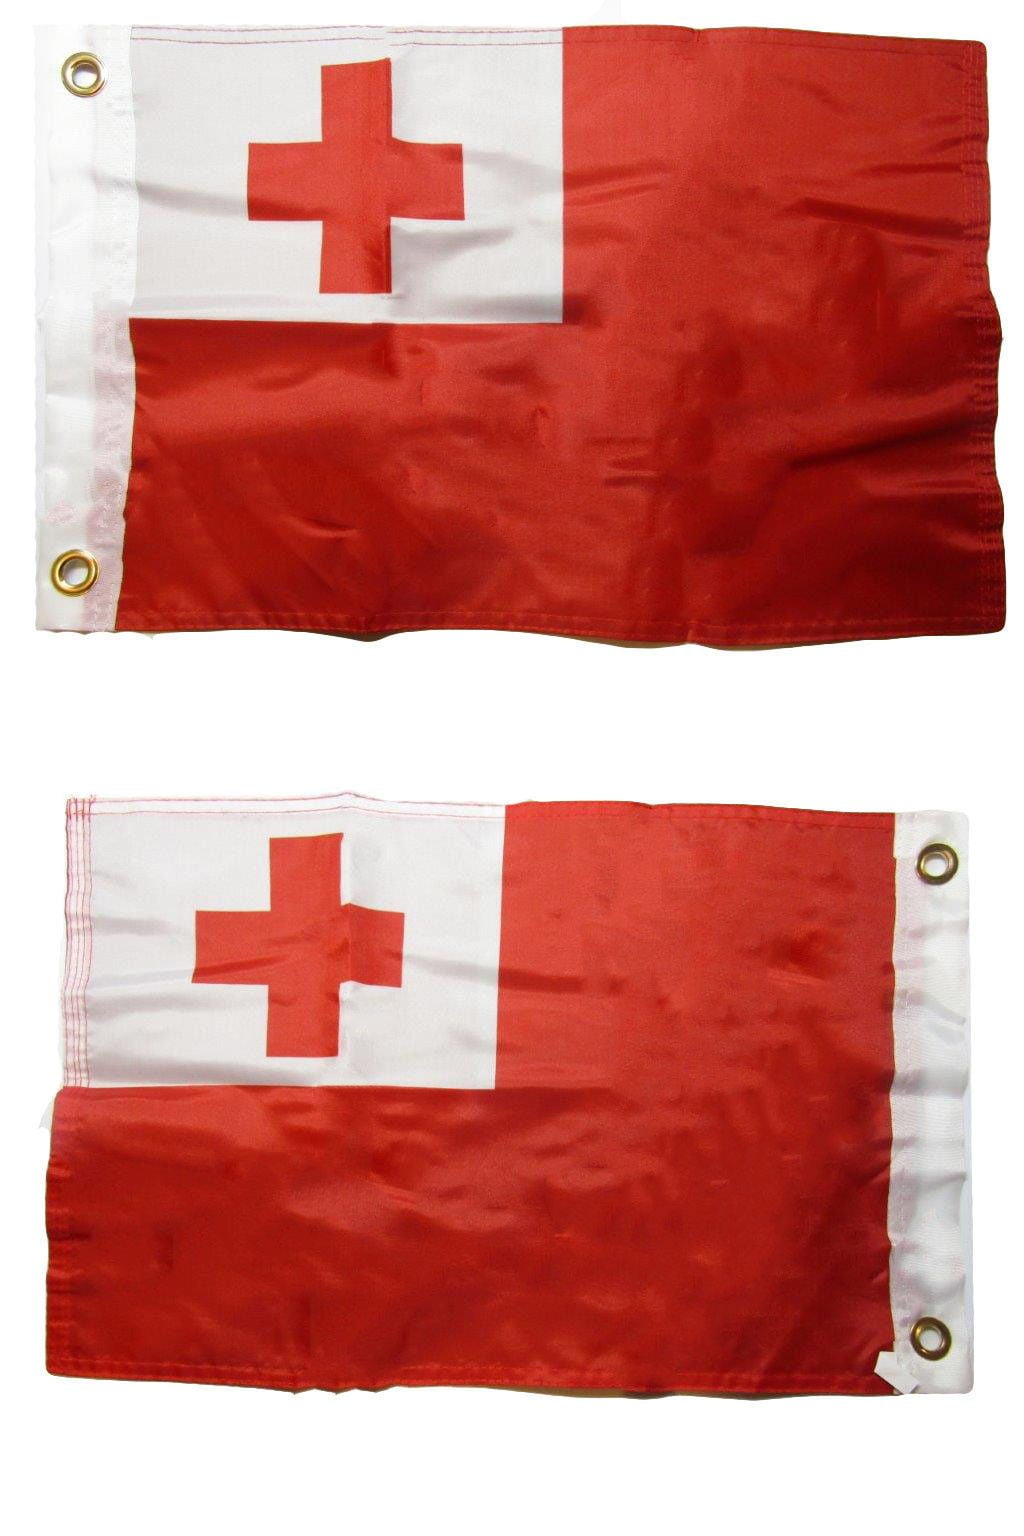 TONGA FLAG 2X3 FEET TONGAN 2'X3' NEW WHOLESALE 